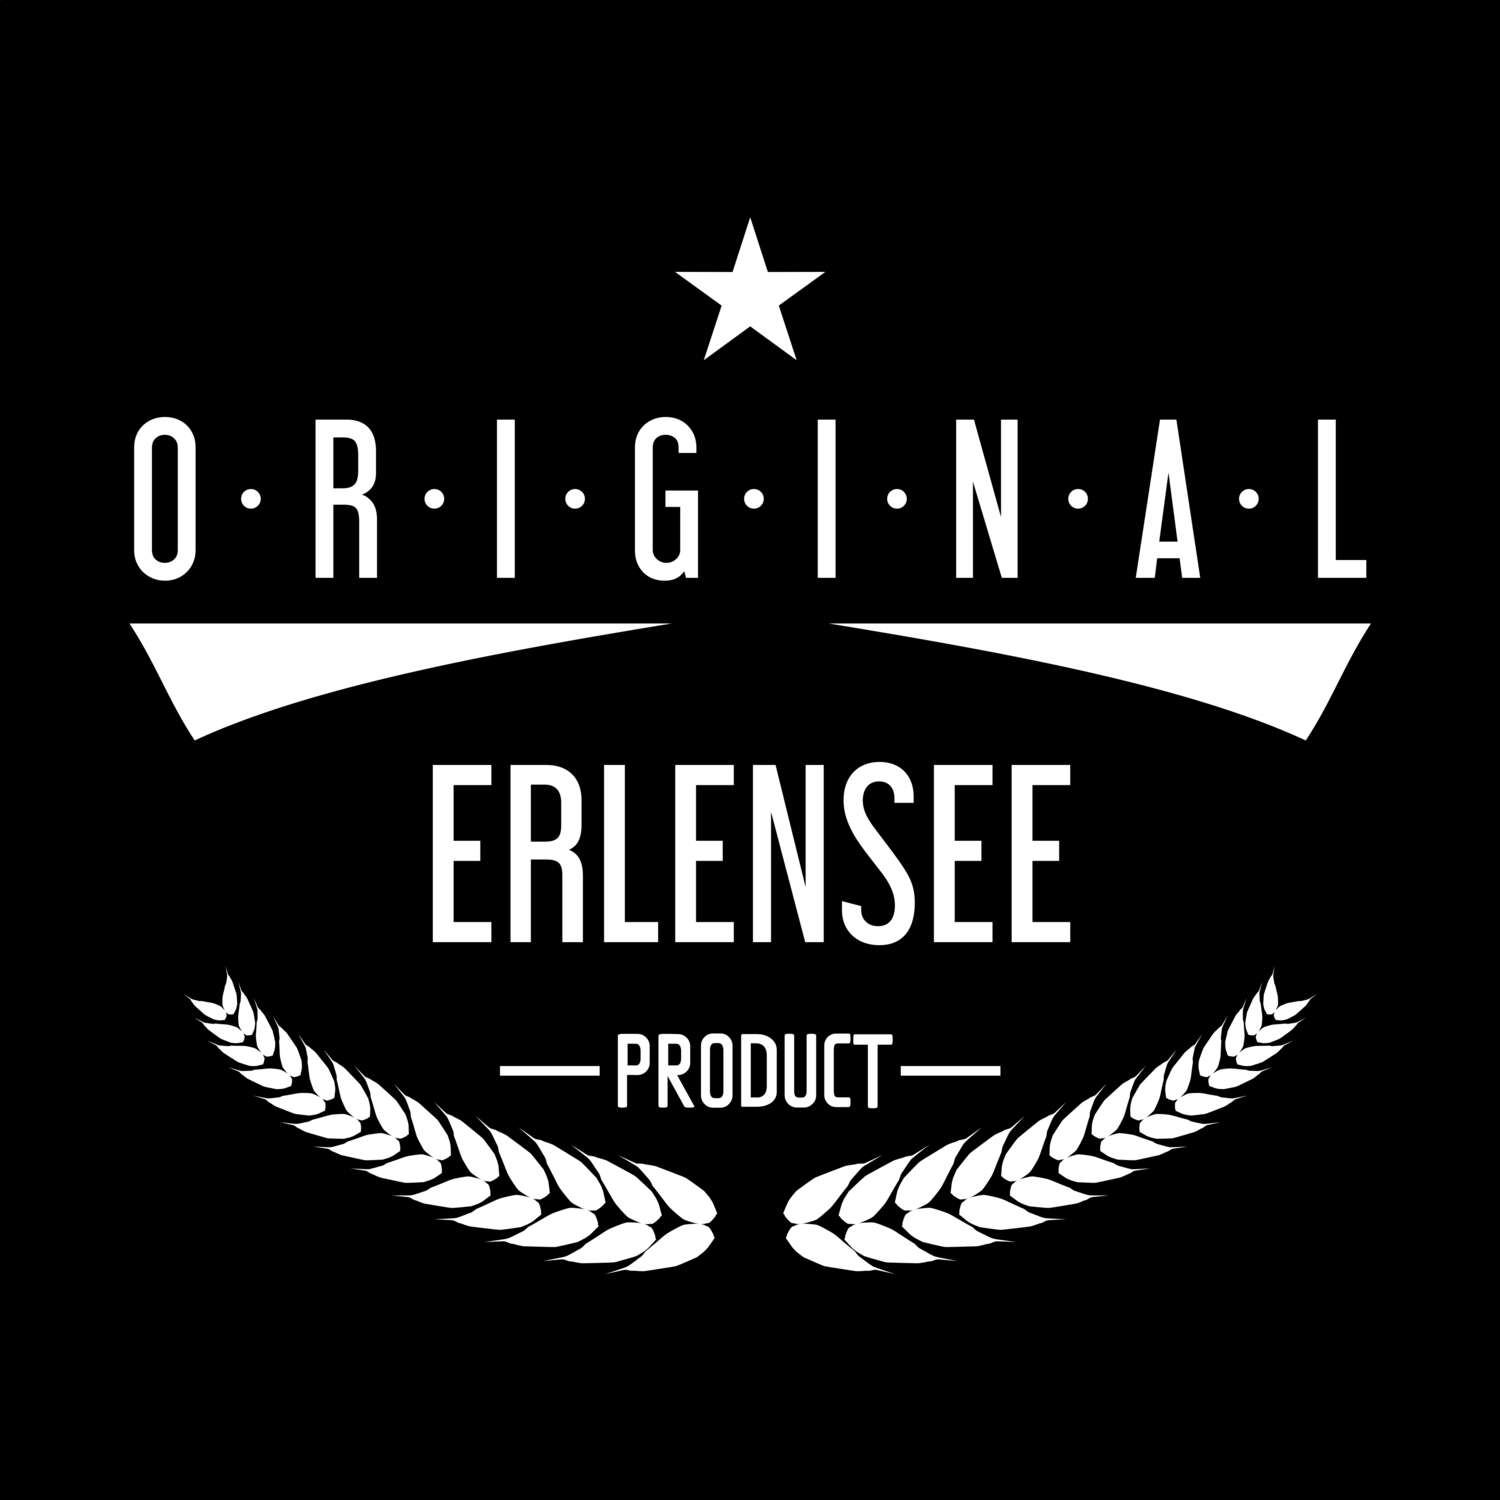 Erlensee T-Shirt »Original Product«